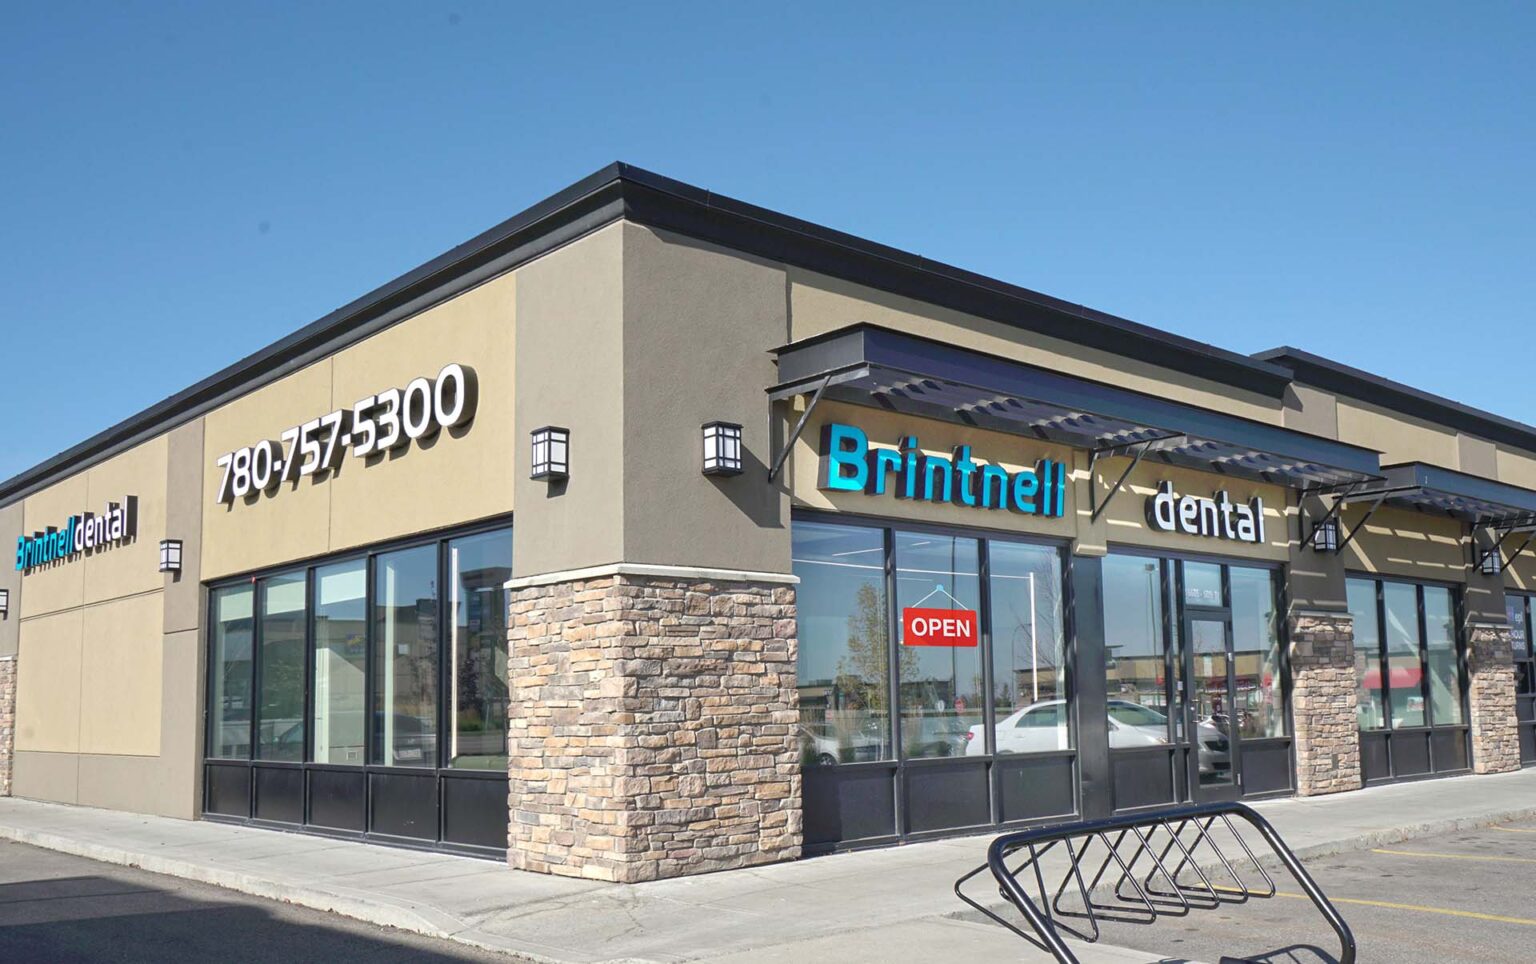 brintnell dental clinc storefront